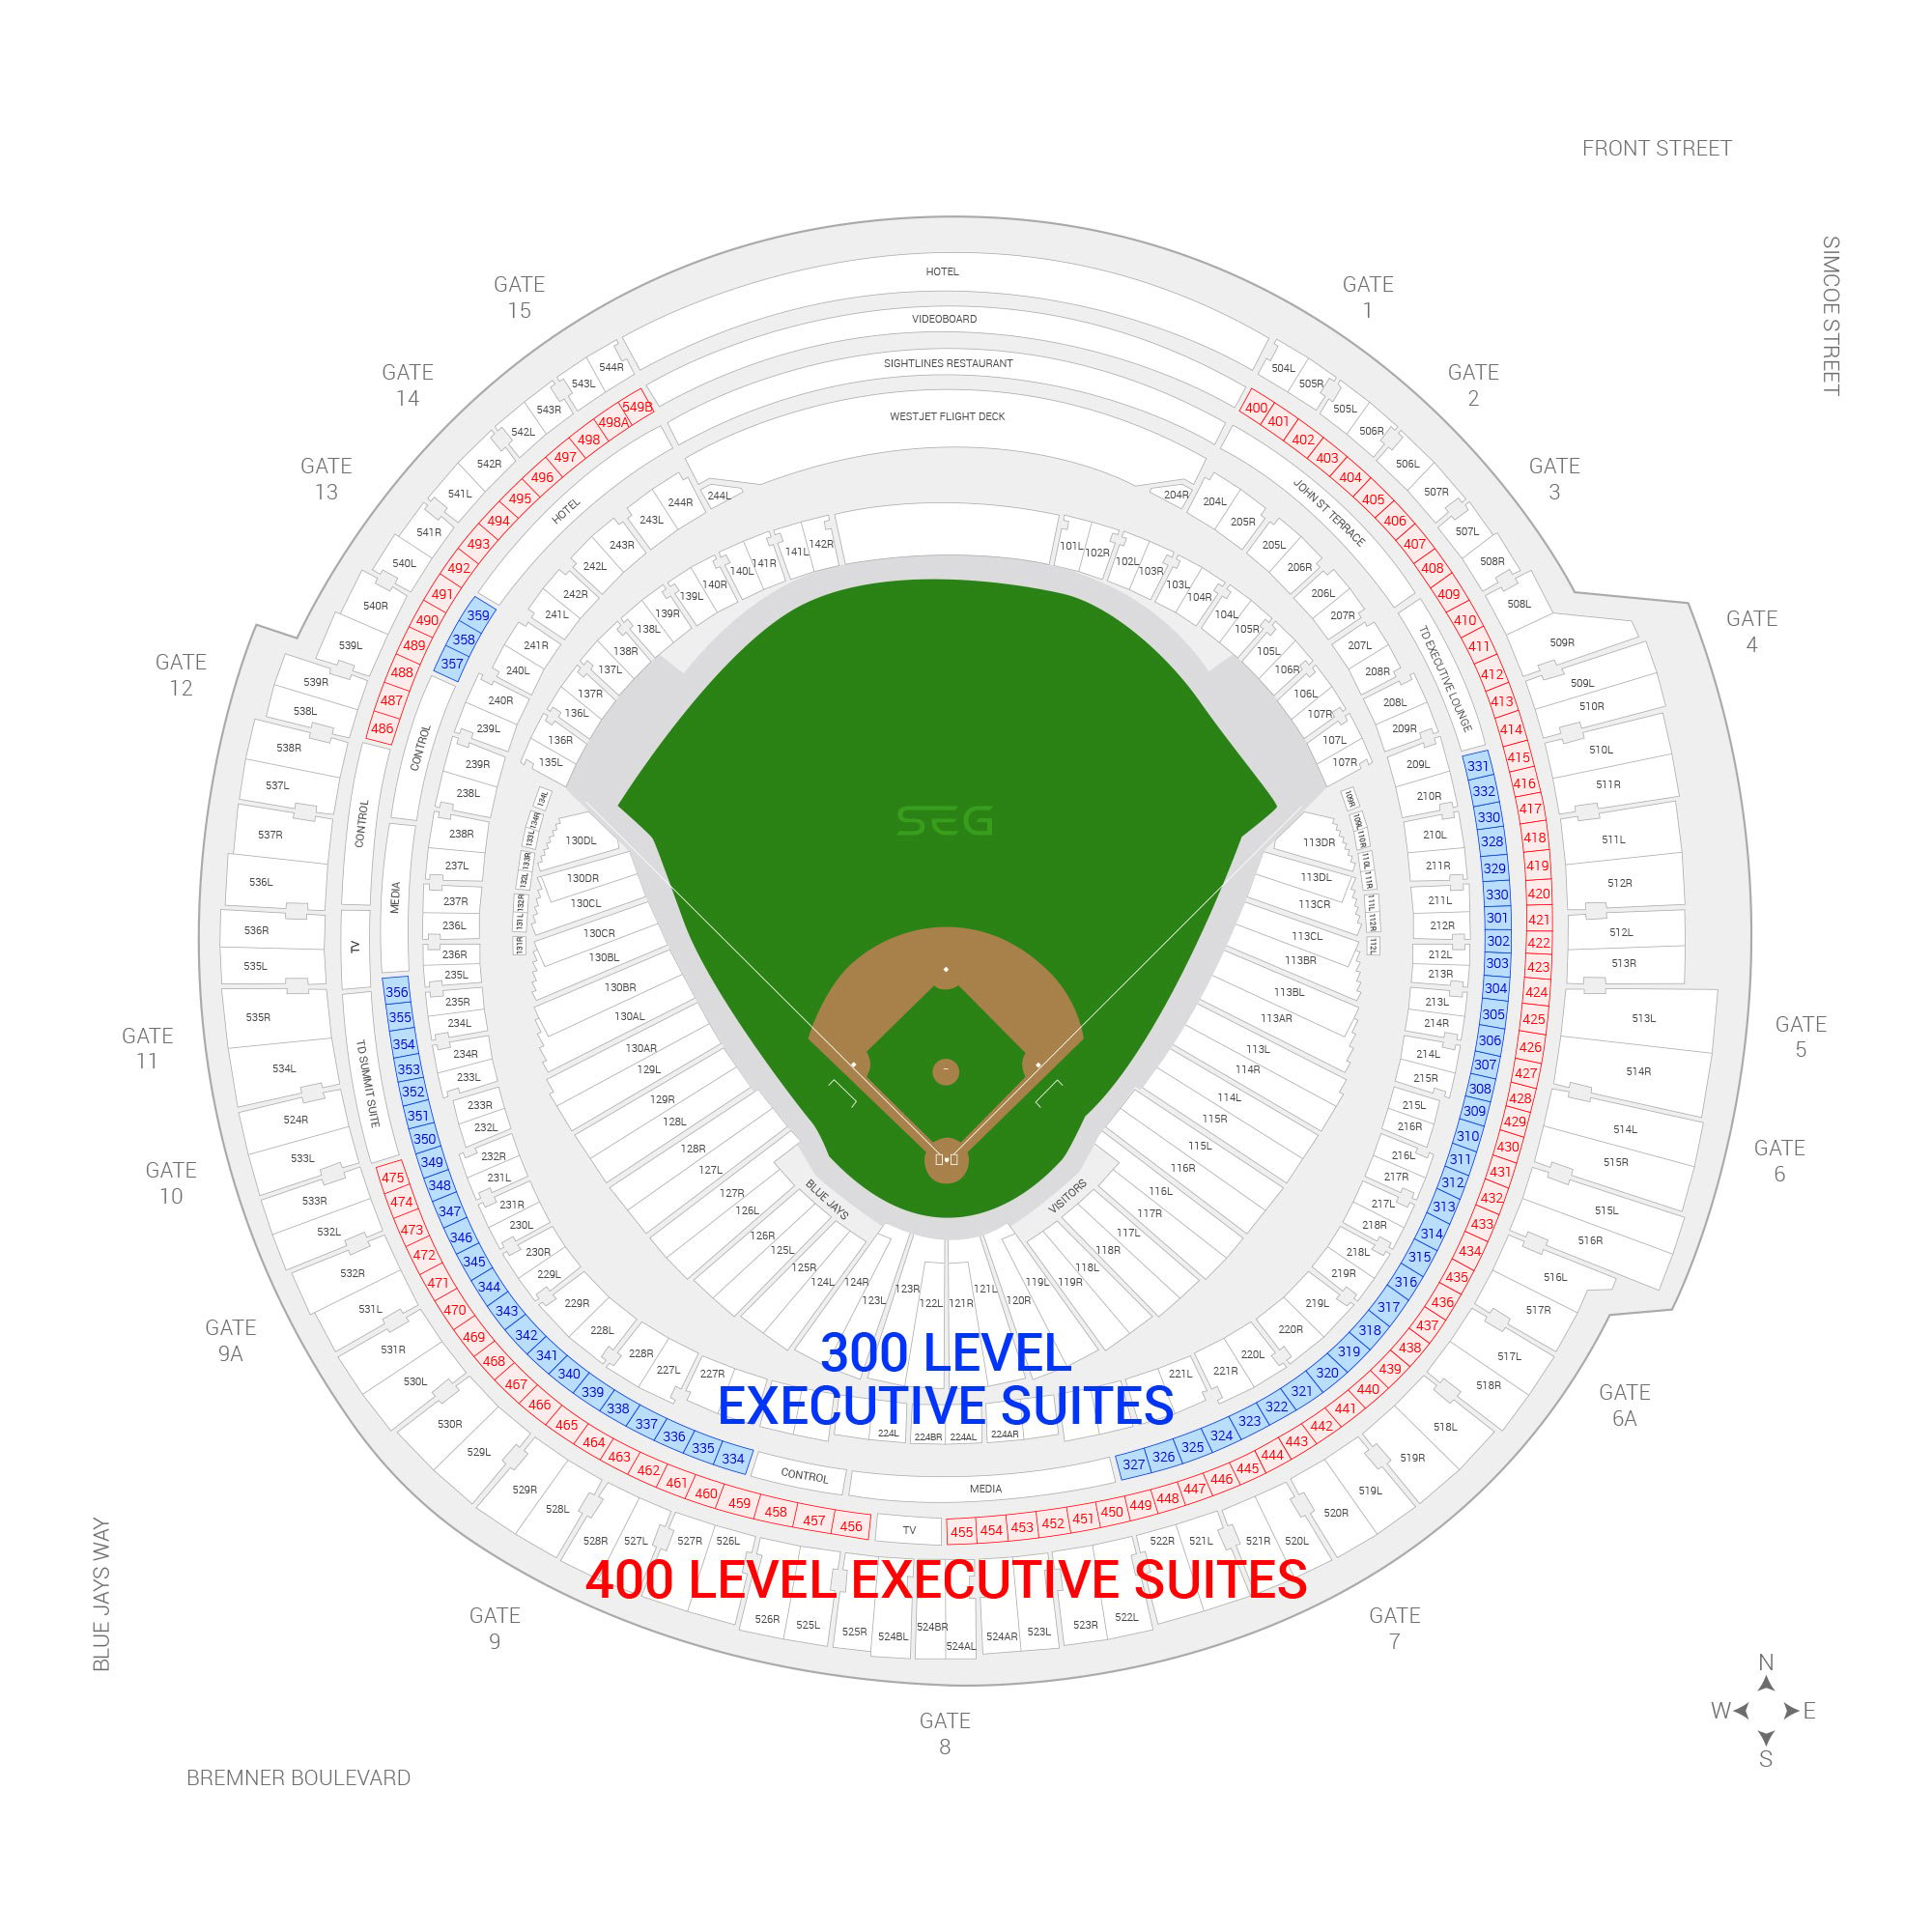 baseball blue jays rogers centre seating chart